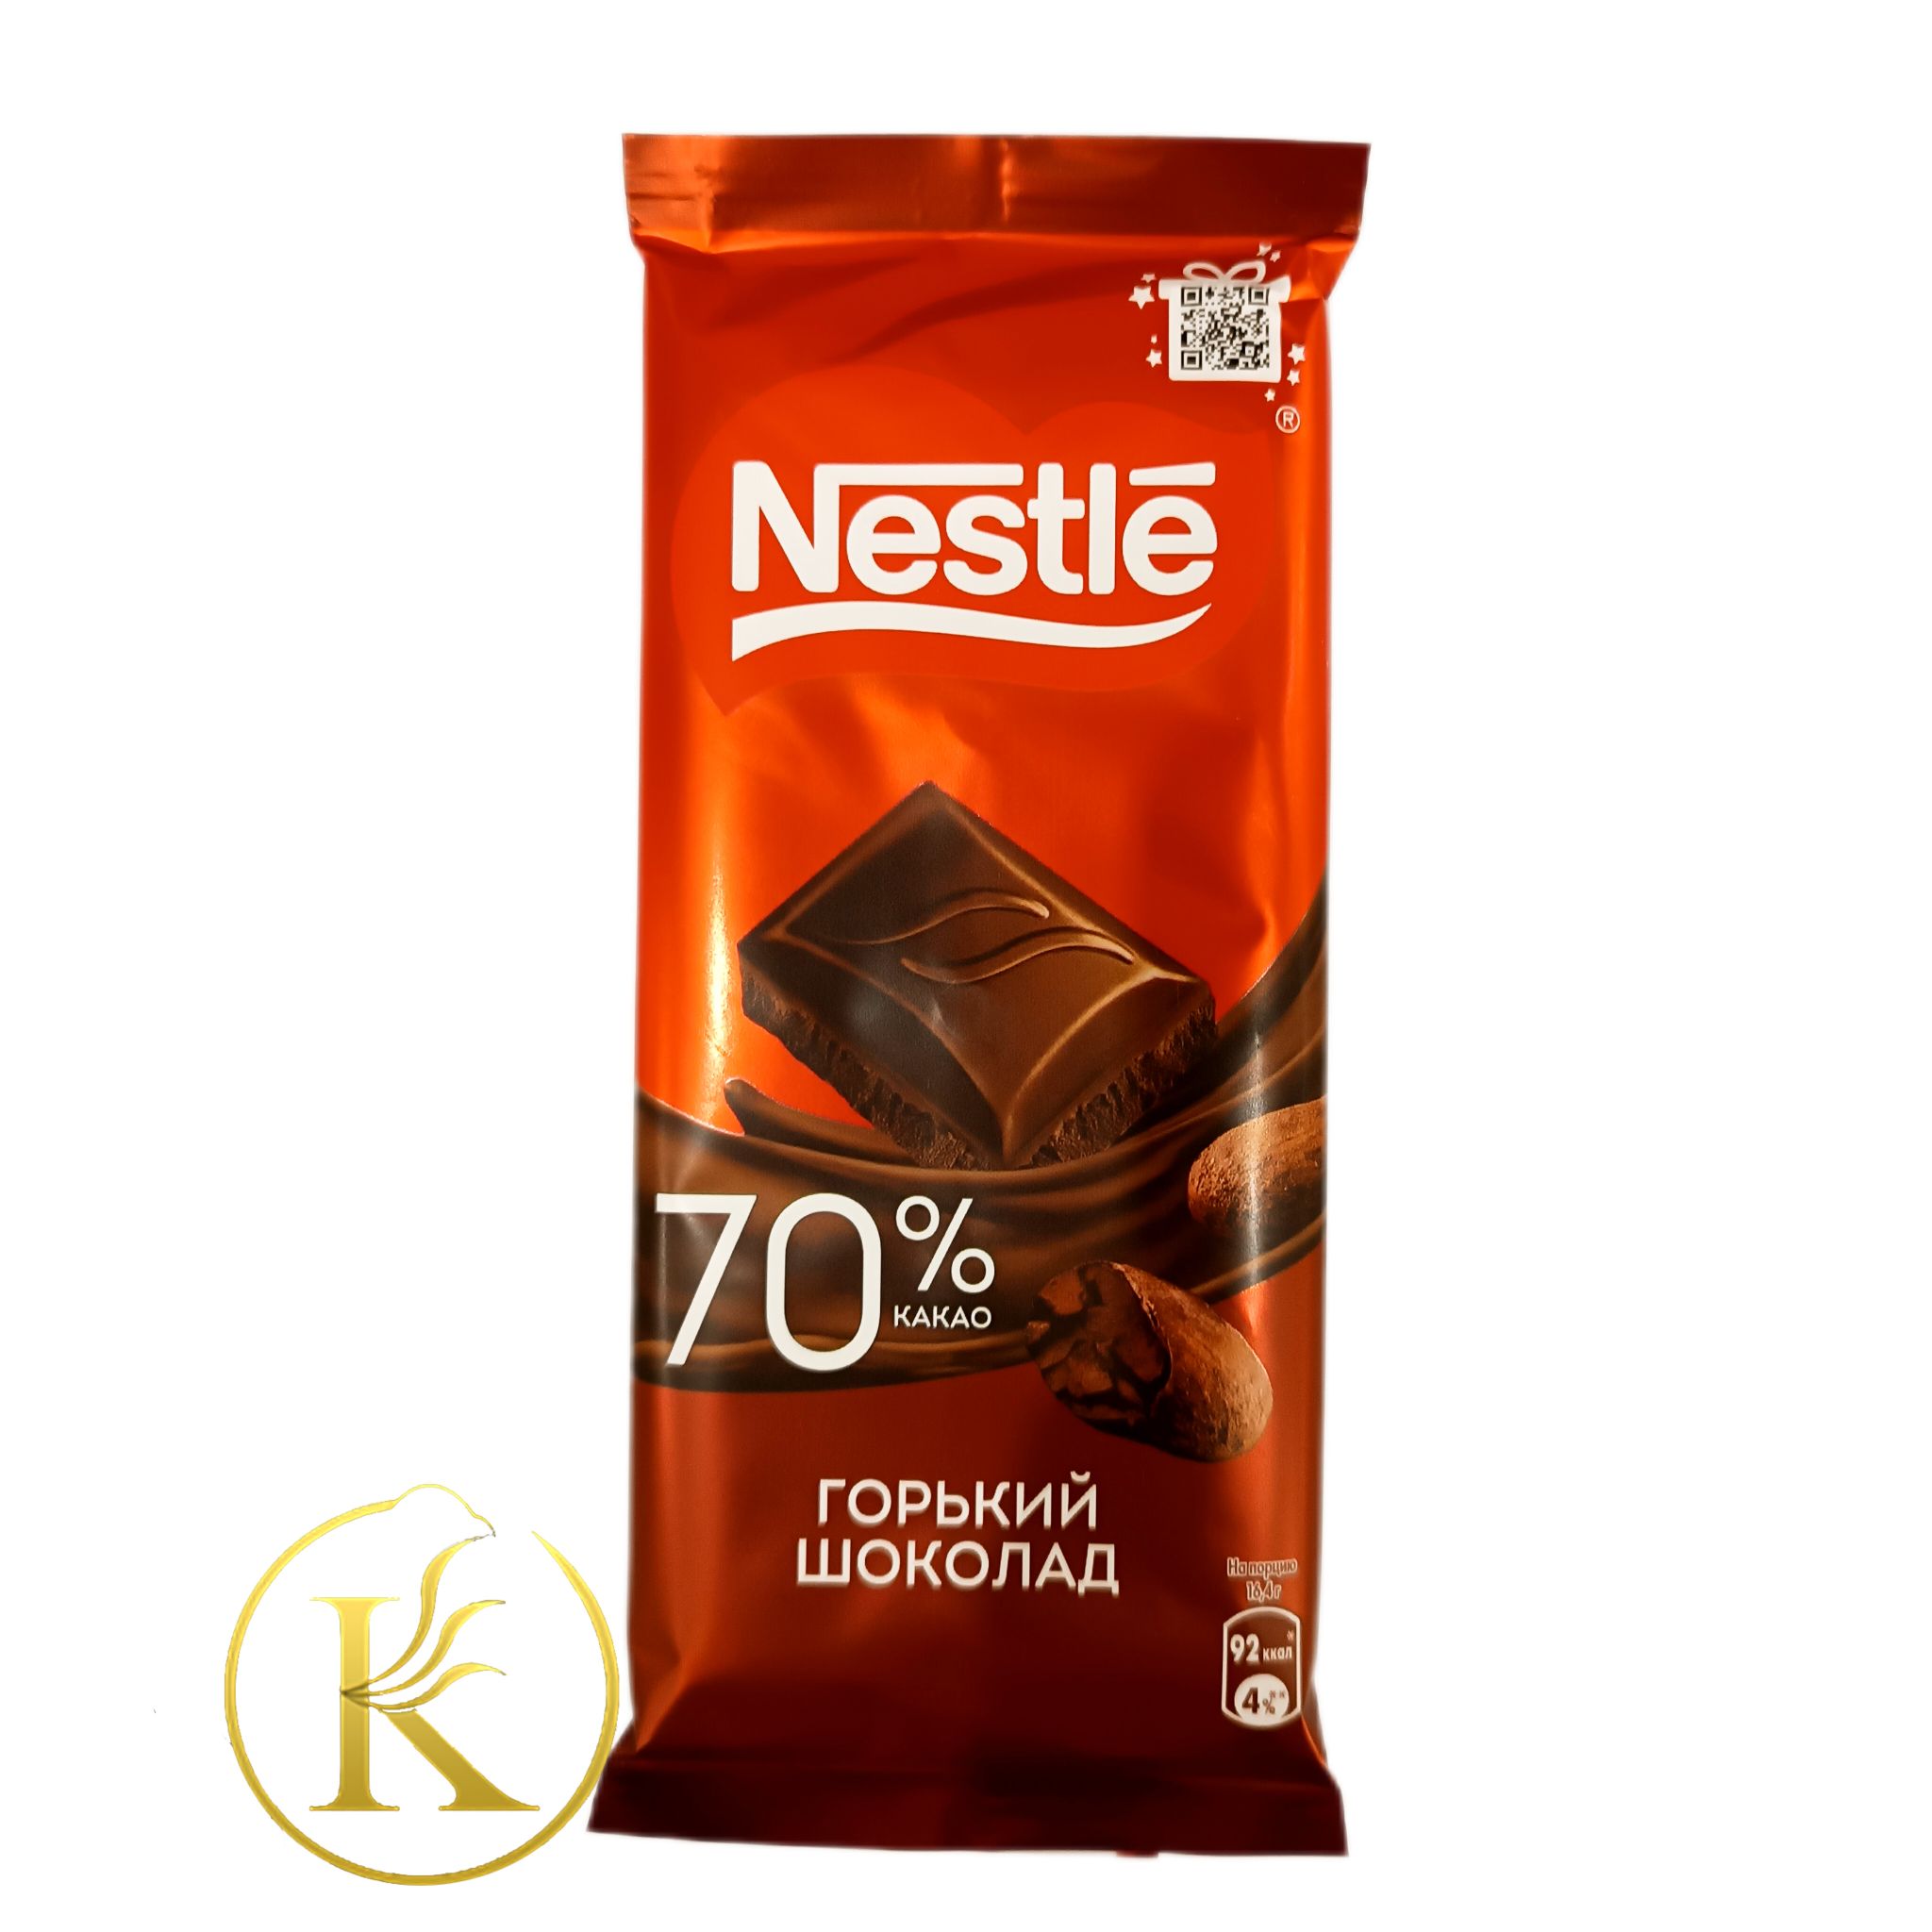 تابلت شکلات تلخ 70% نستله 82 گرم nestle